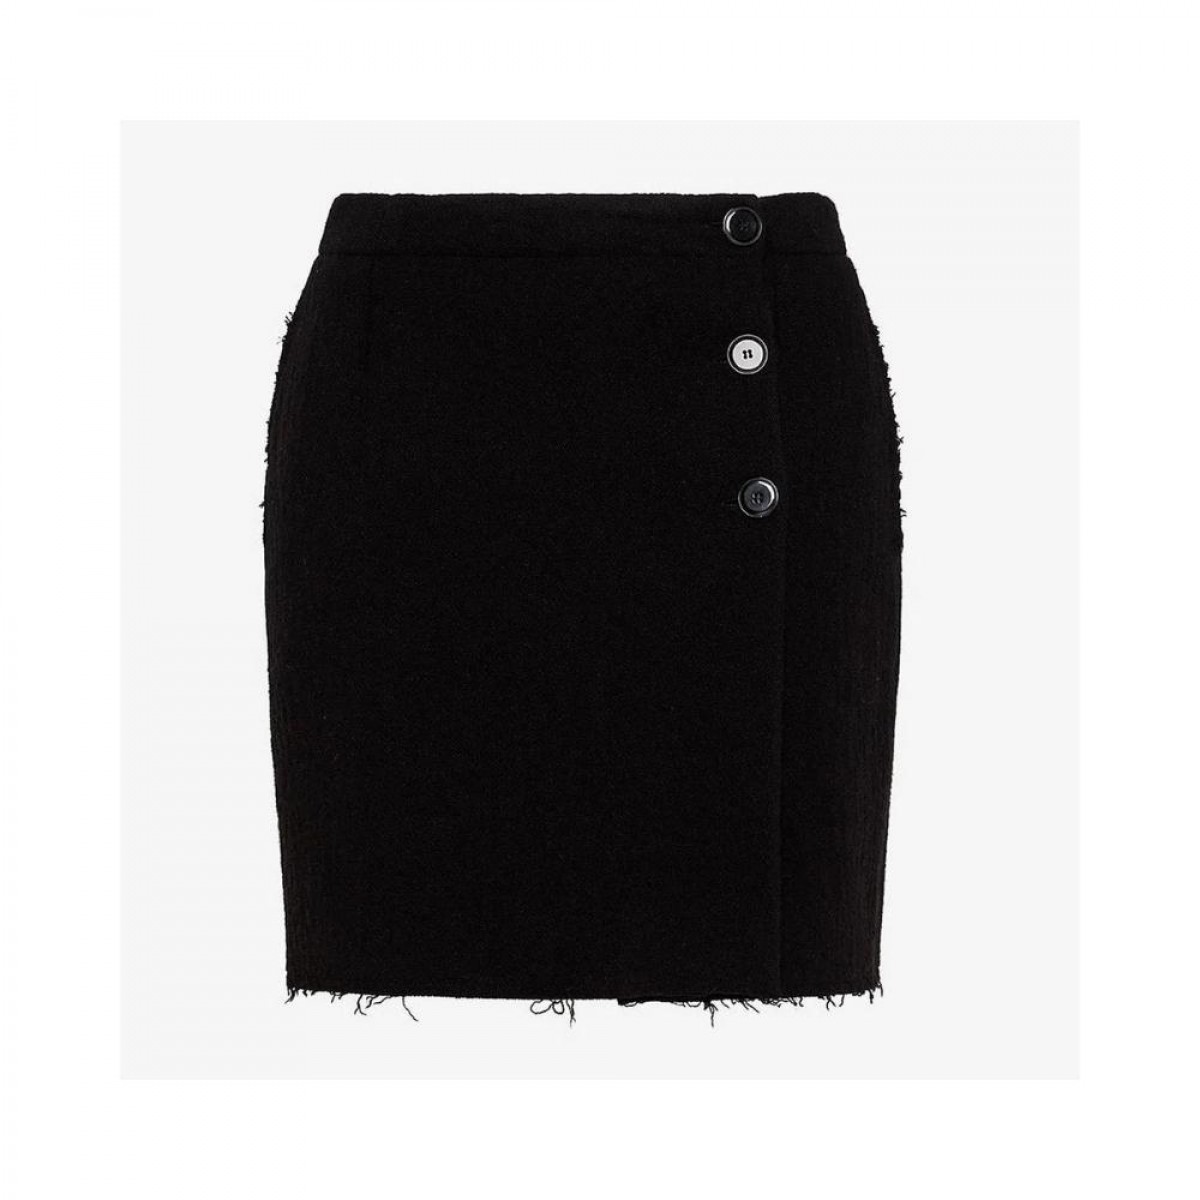 pomandére skirt - black - front